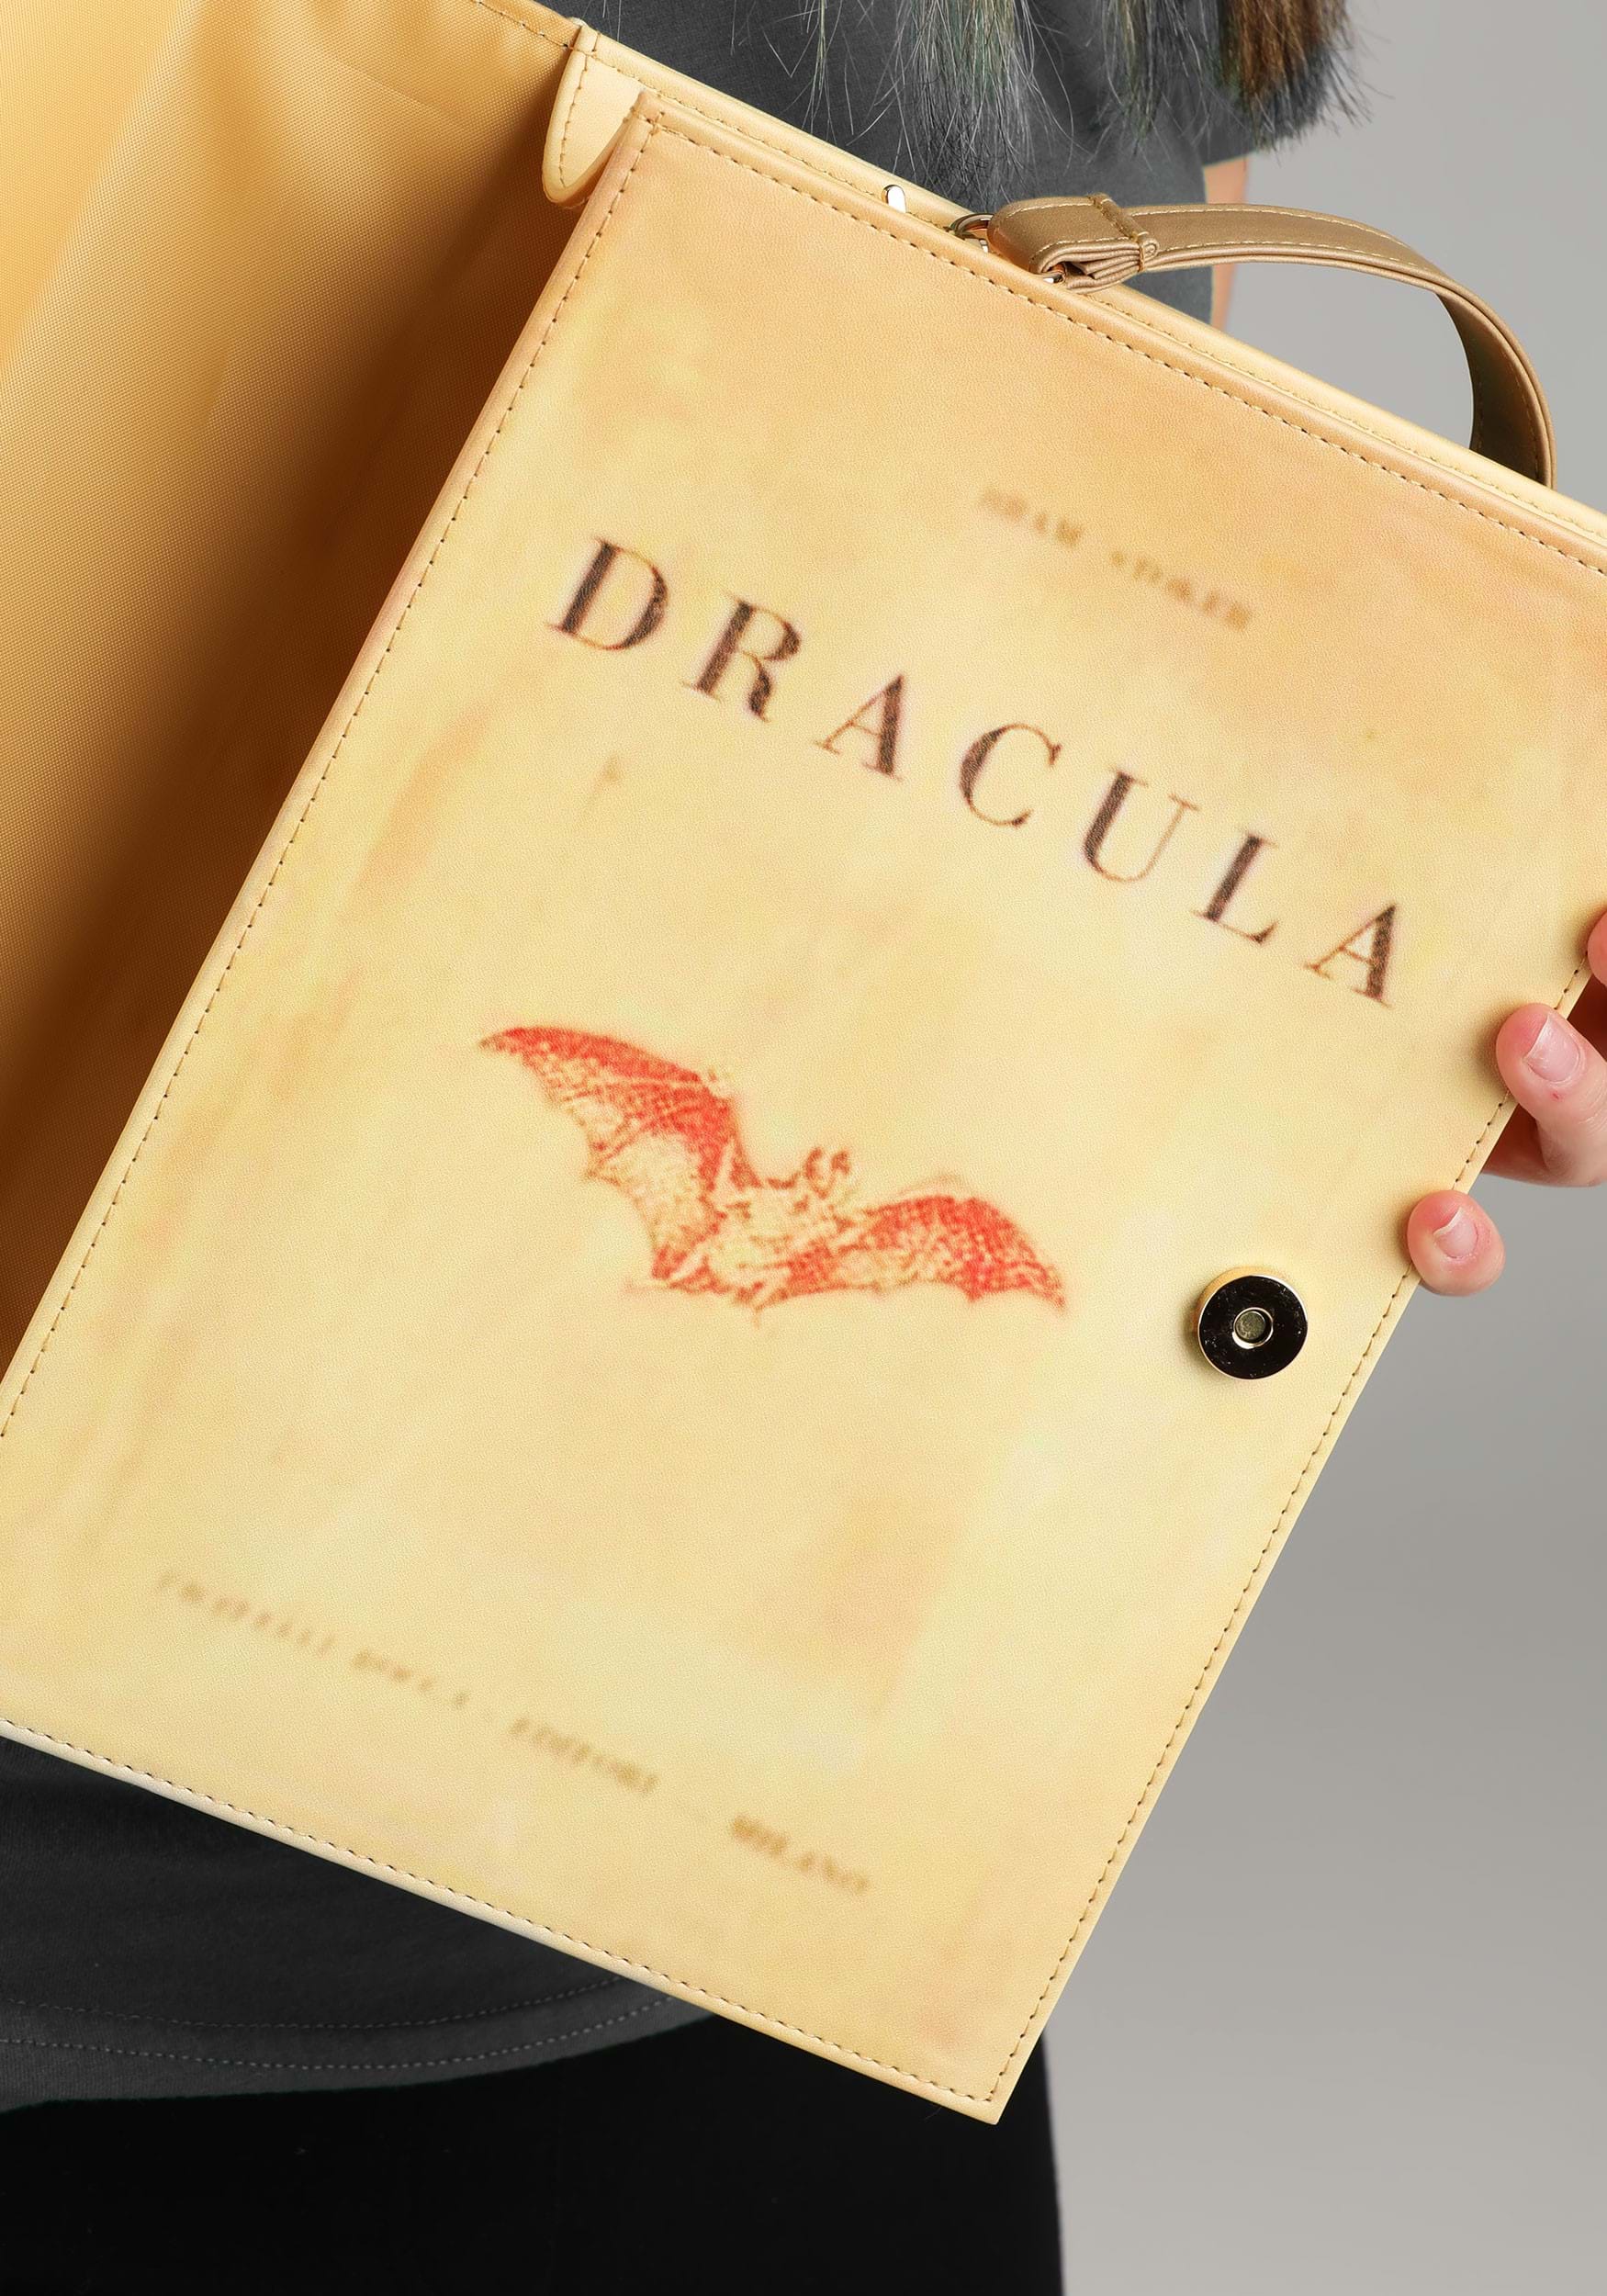 Dracula Book Shaped Purse